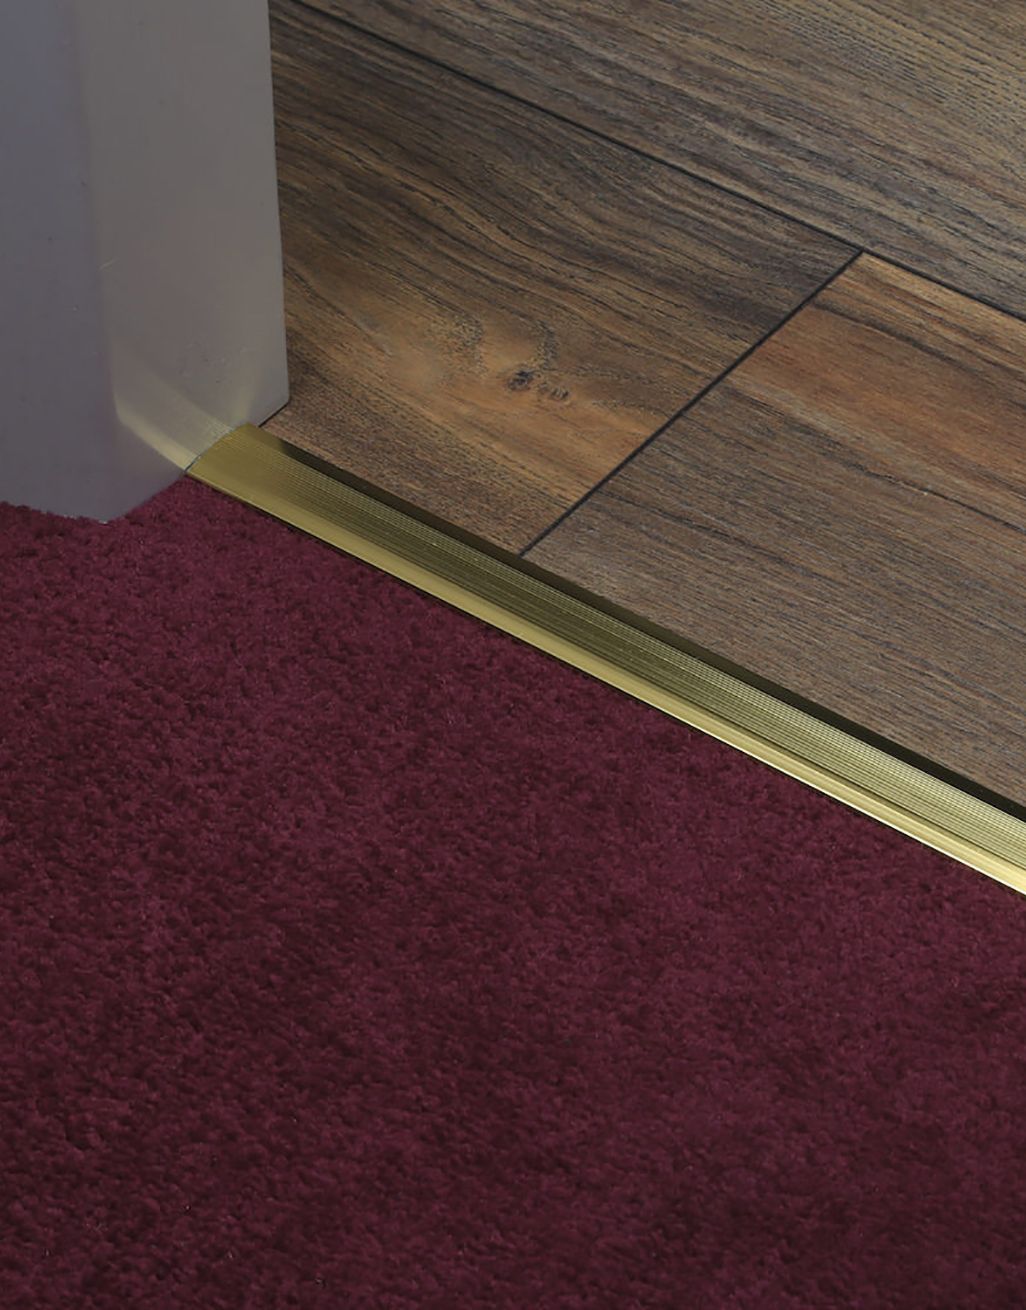 Single Z Doorbar Gold Direct Wood, My Floor Gold Laminate Flooring